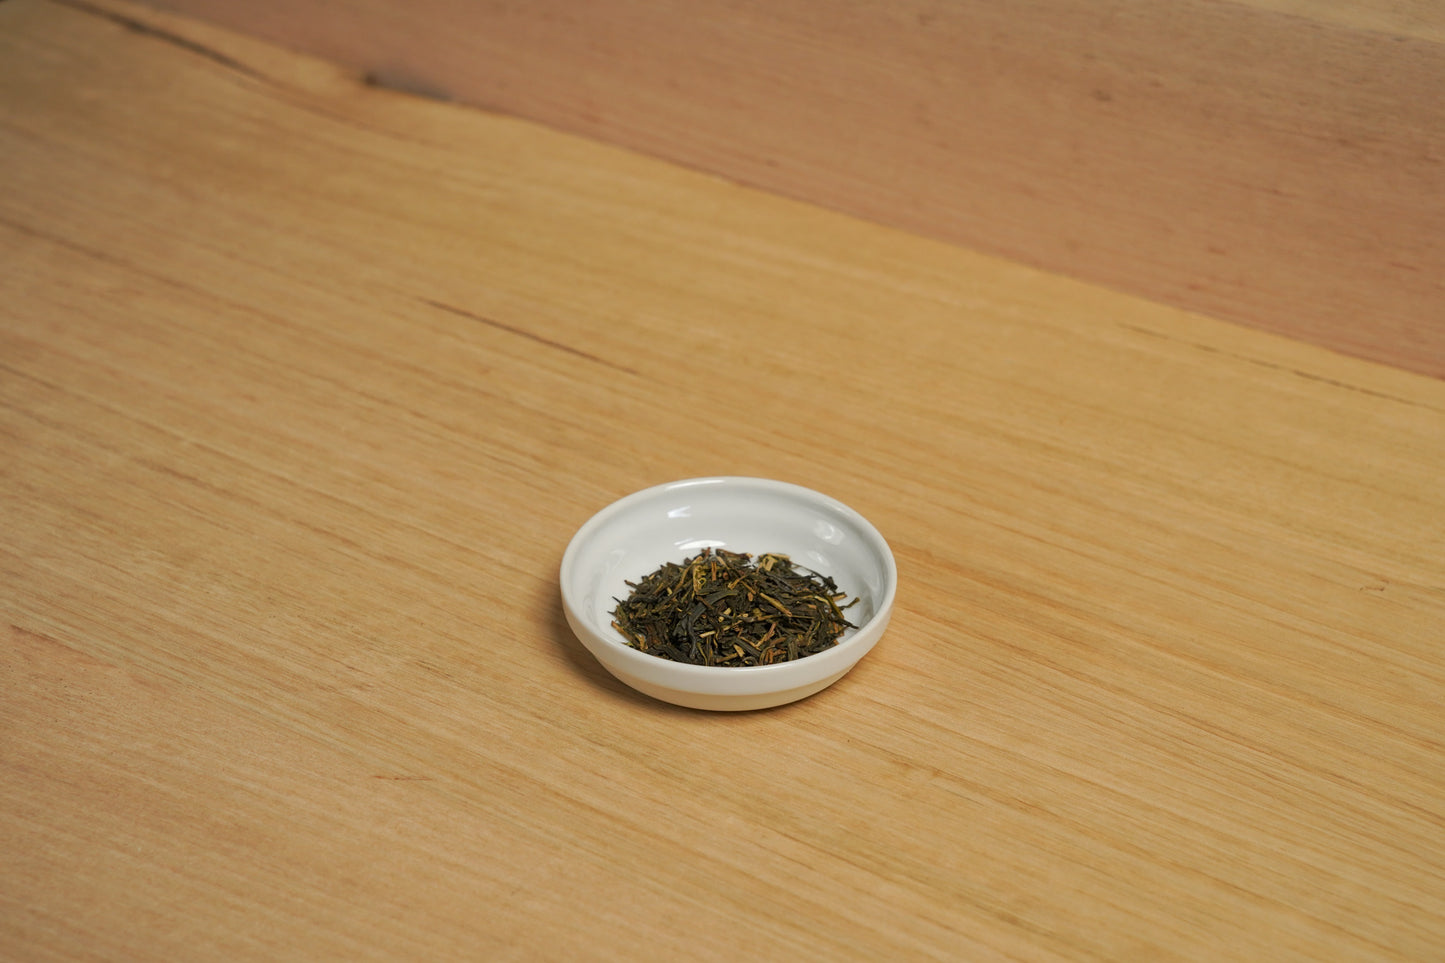 TEA BY MONAKA - Roasted green tea (Loose leaf / 60g)